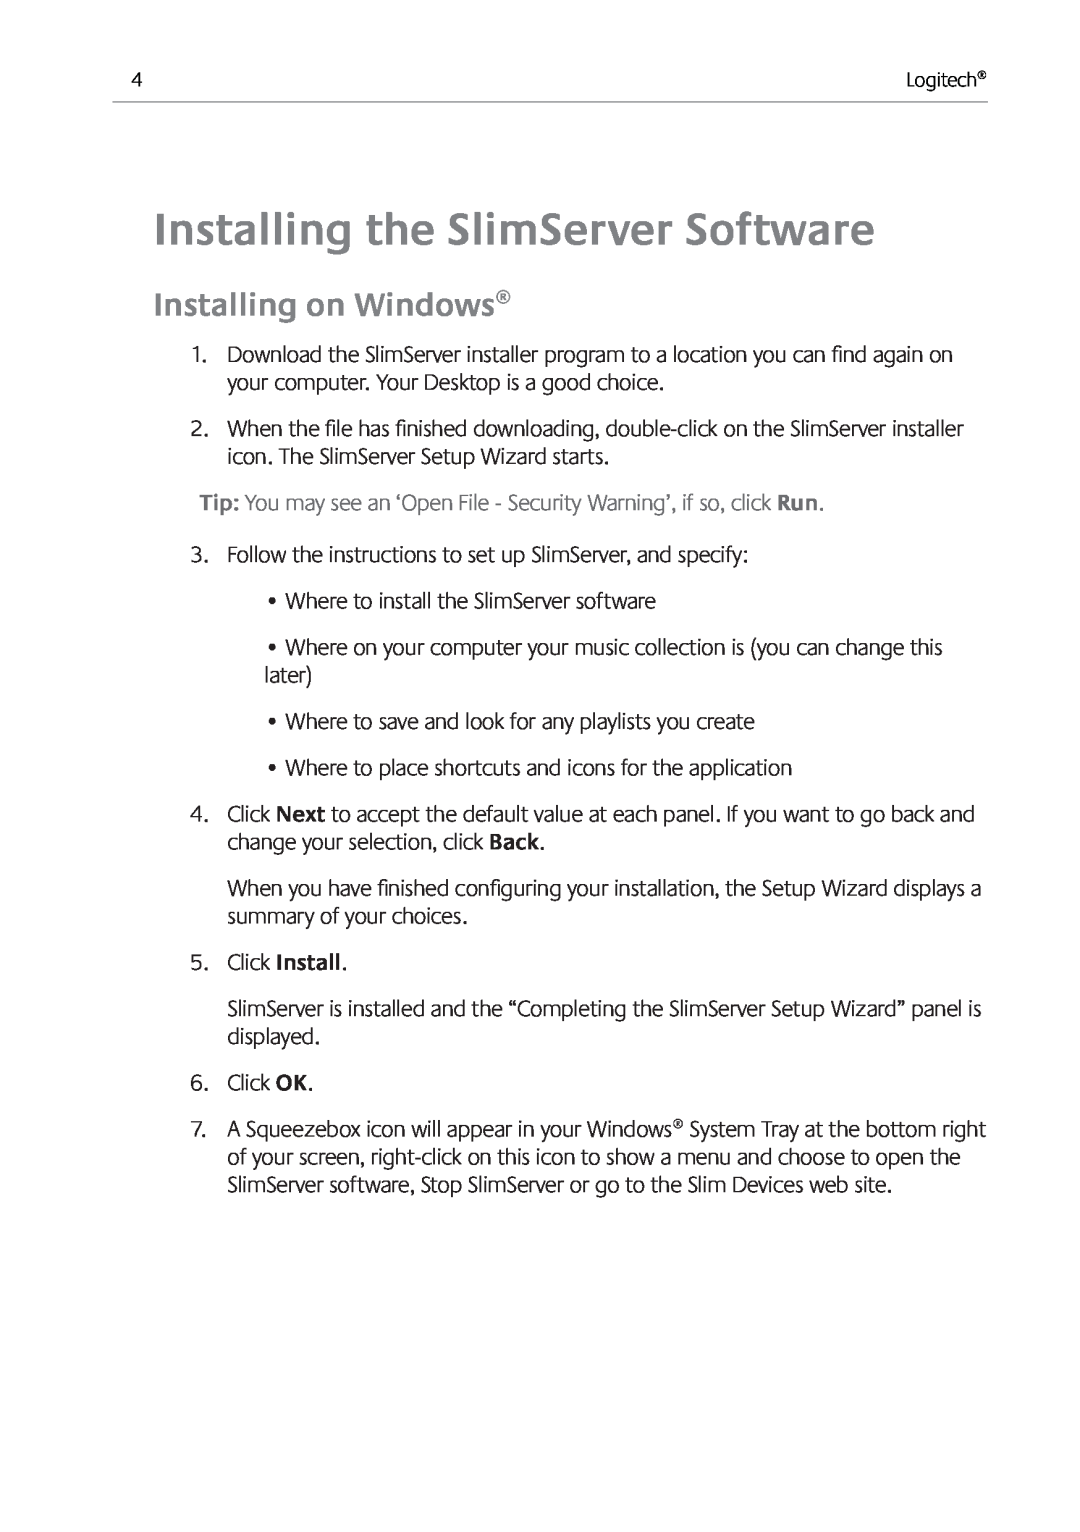 Logitech Ft manual Installing the SlimServer Software, Installing on Windows 